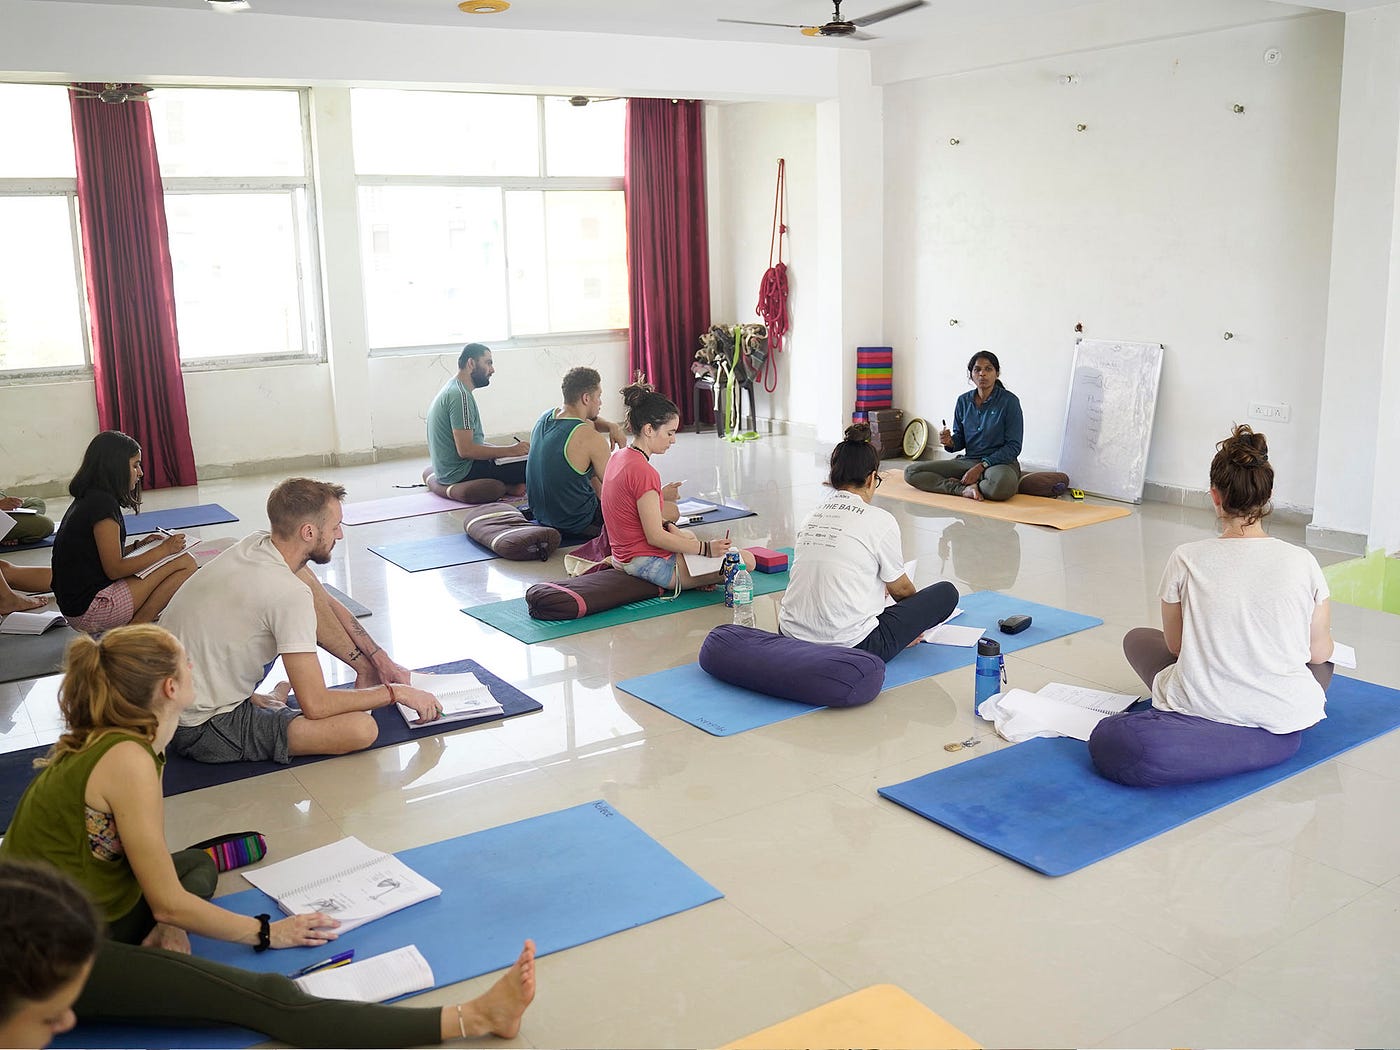 How to Pick a Yoga Teacher Training Program